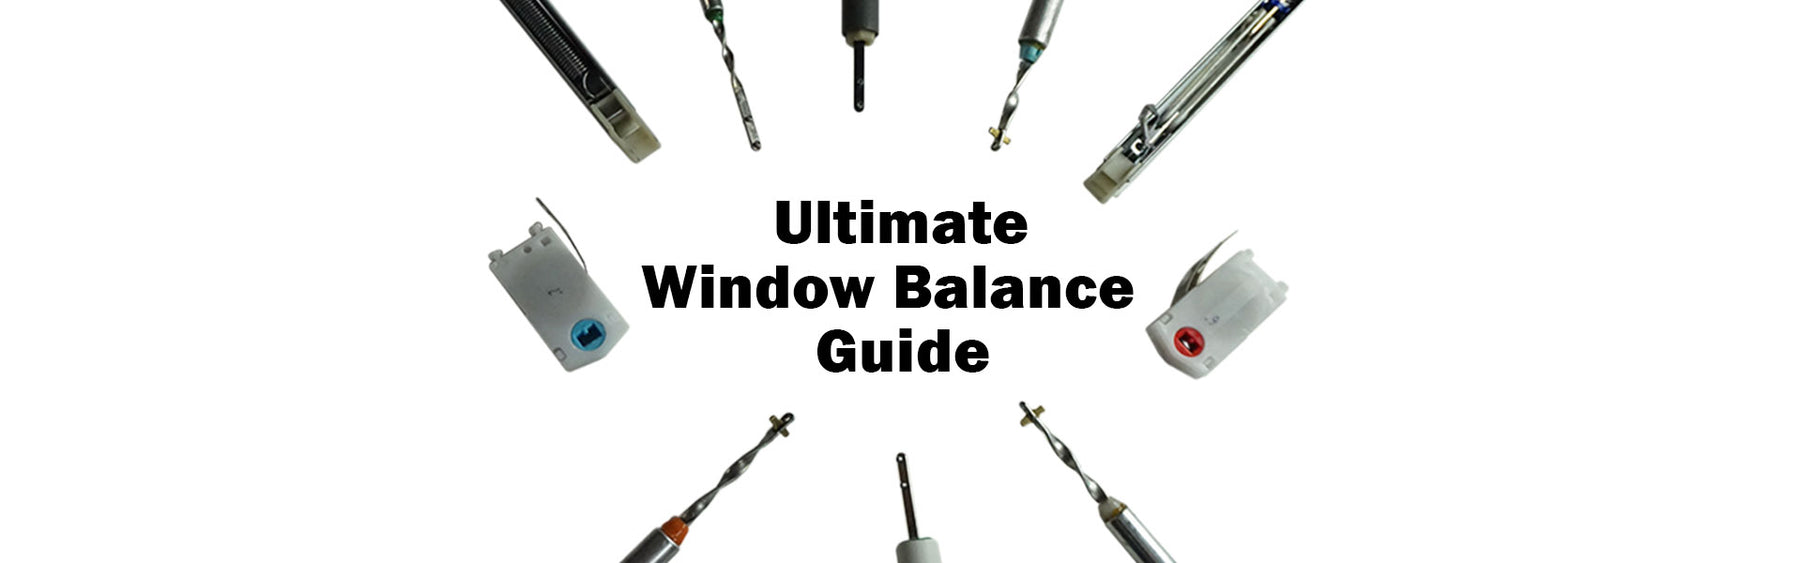 Ultimate Window Balance Guide